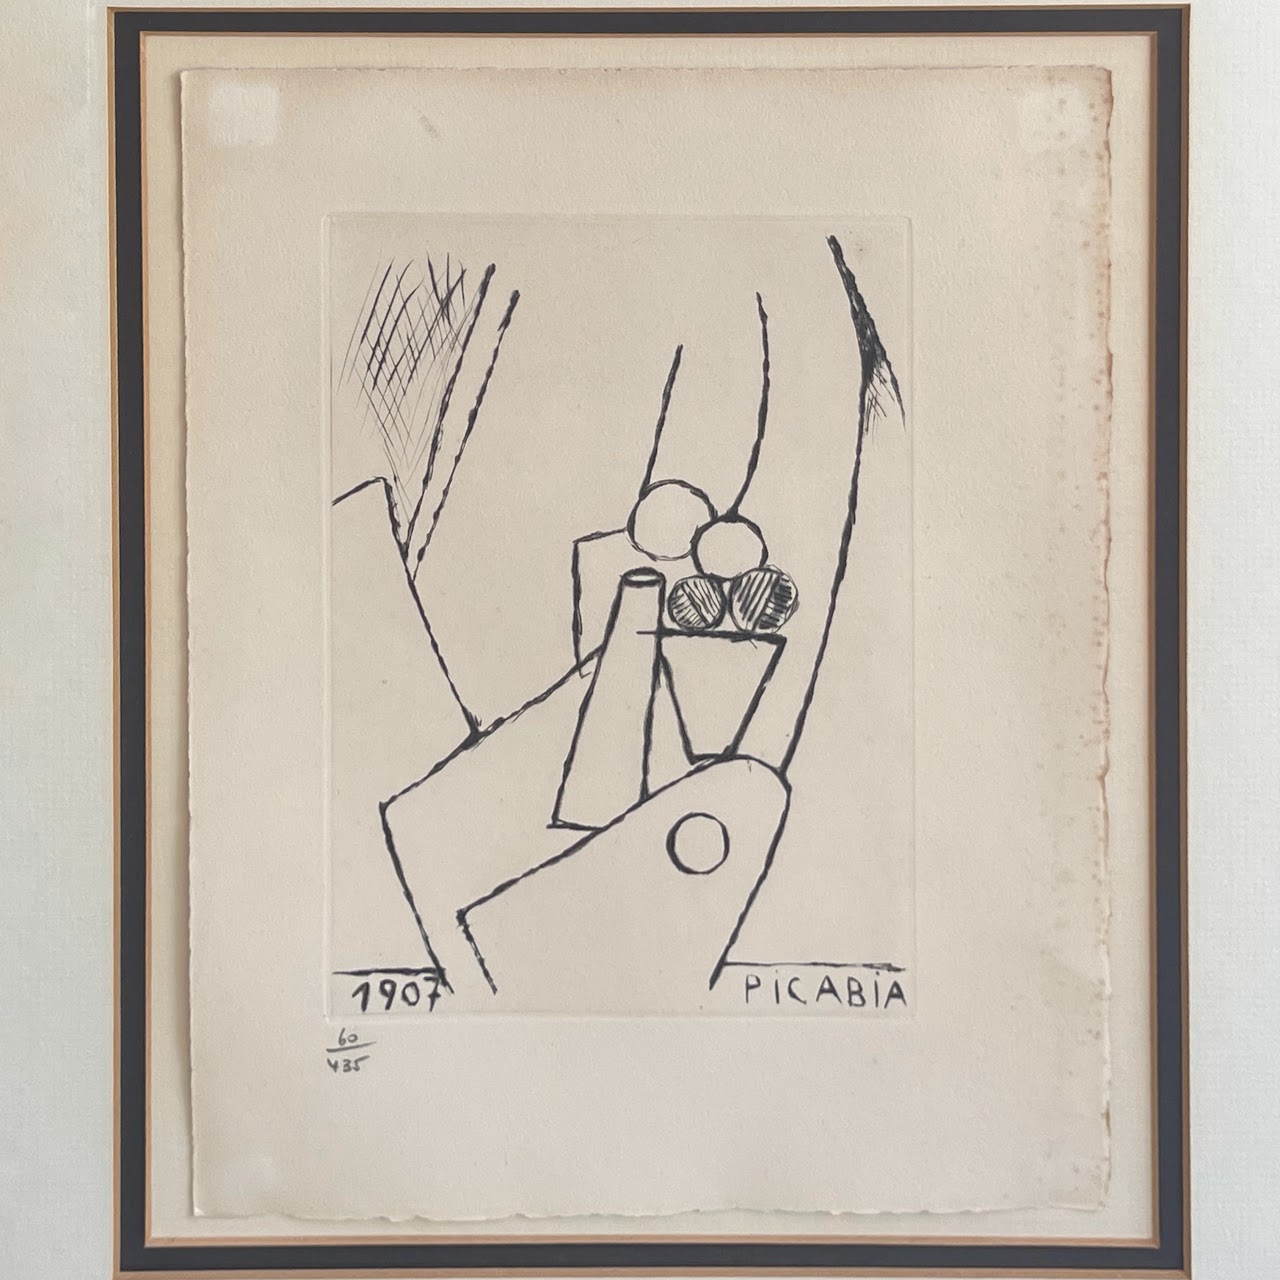 Francis Picabia 'Du Cubisme' Drypoint Etching Folio Plate, 1947